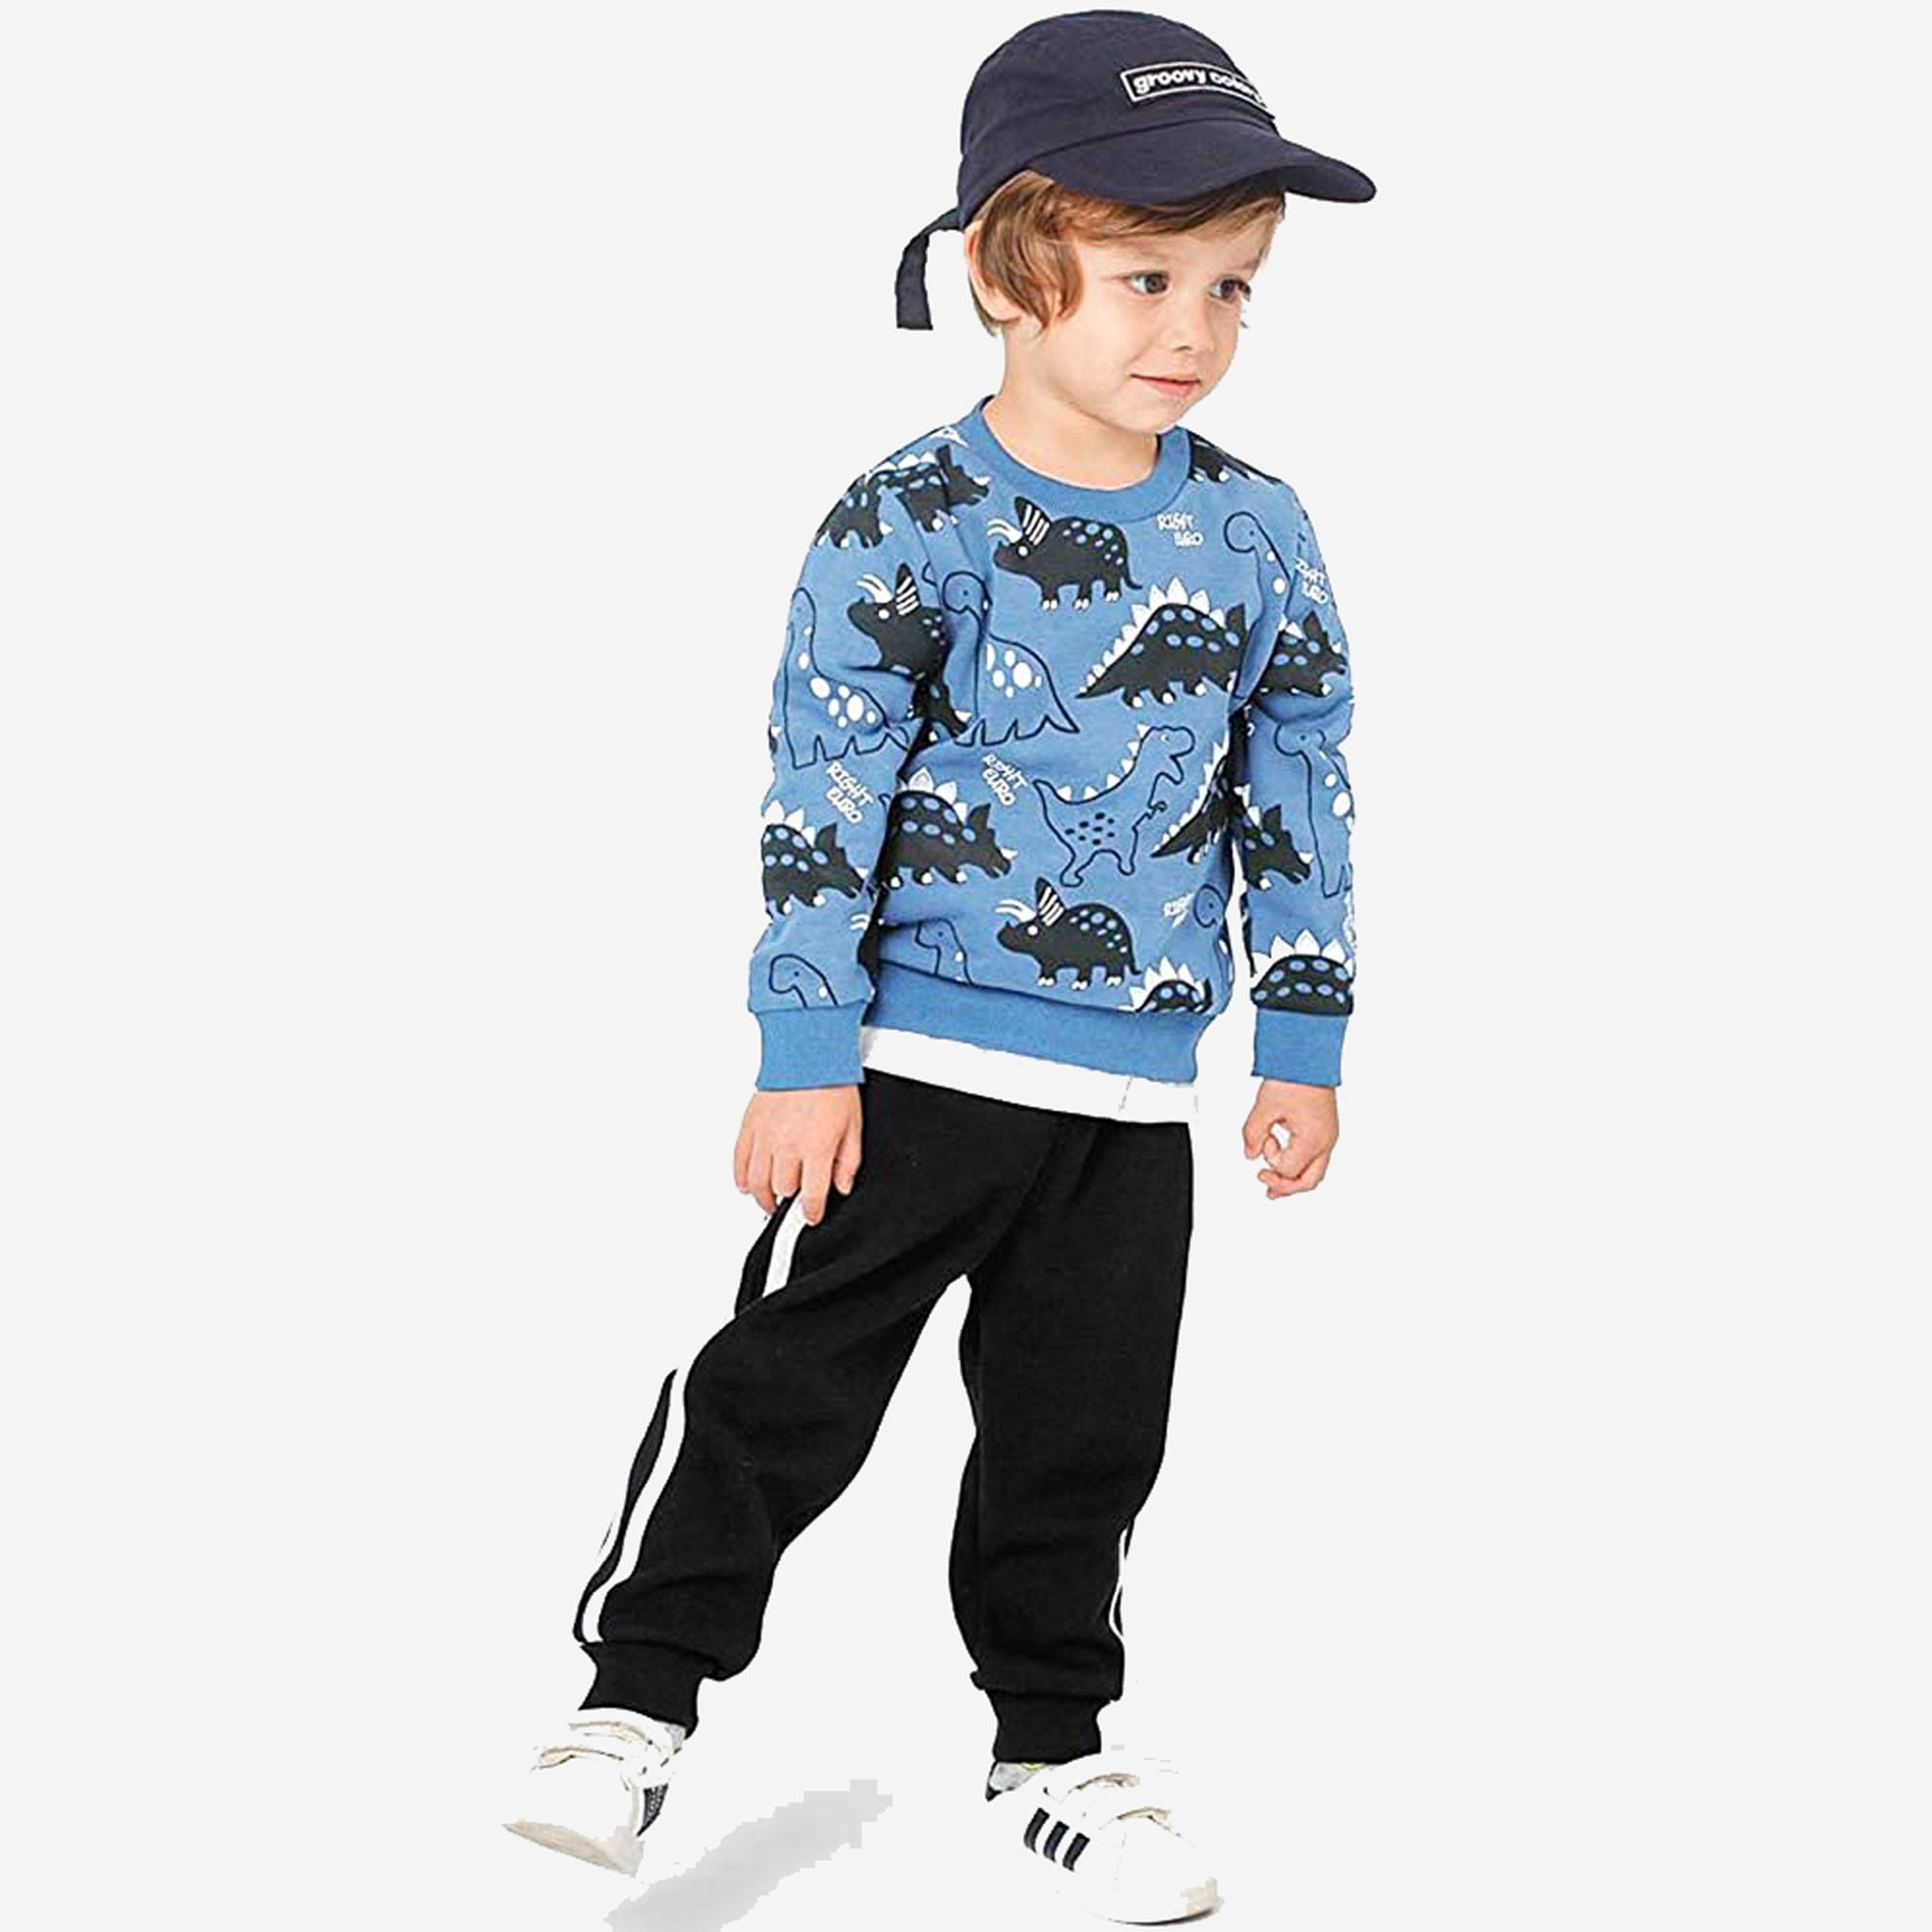 ROWEY Toddler Boys Sweatshirts Dinosaur  Long Sleeve Kids Sport Outdoor Crewneck Pullover Tops Tees 100% Cotton 